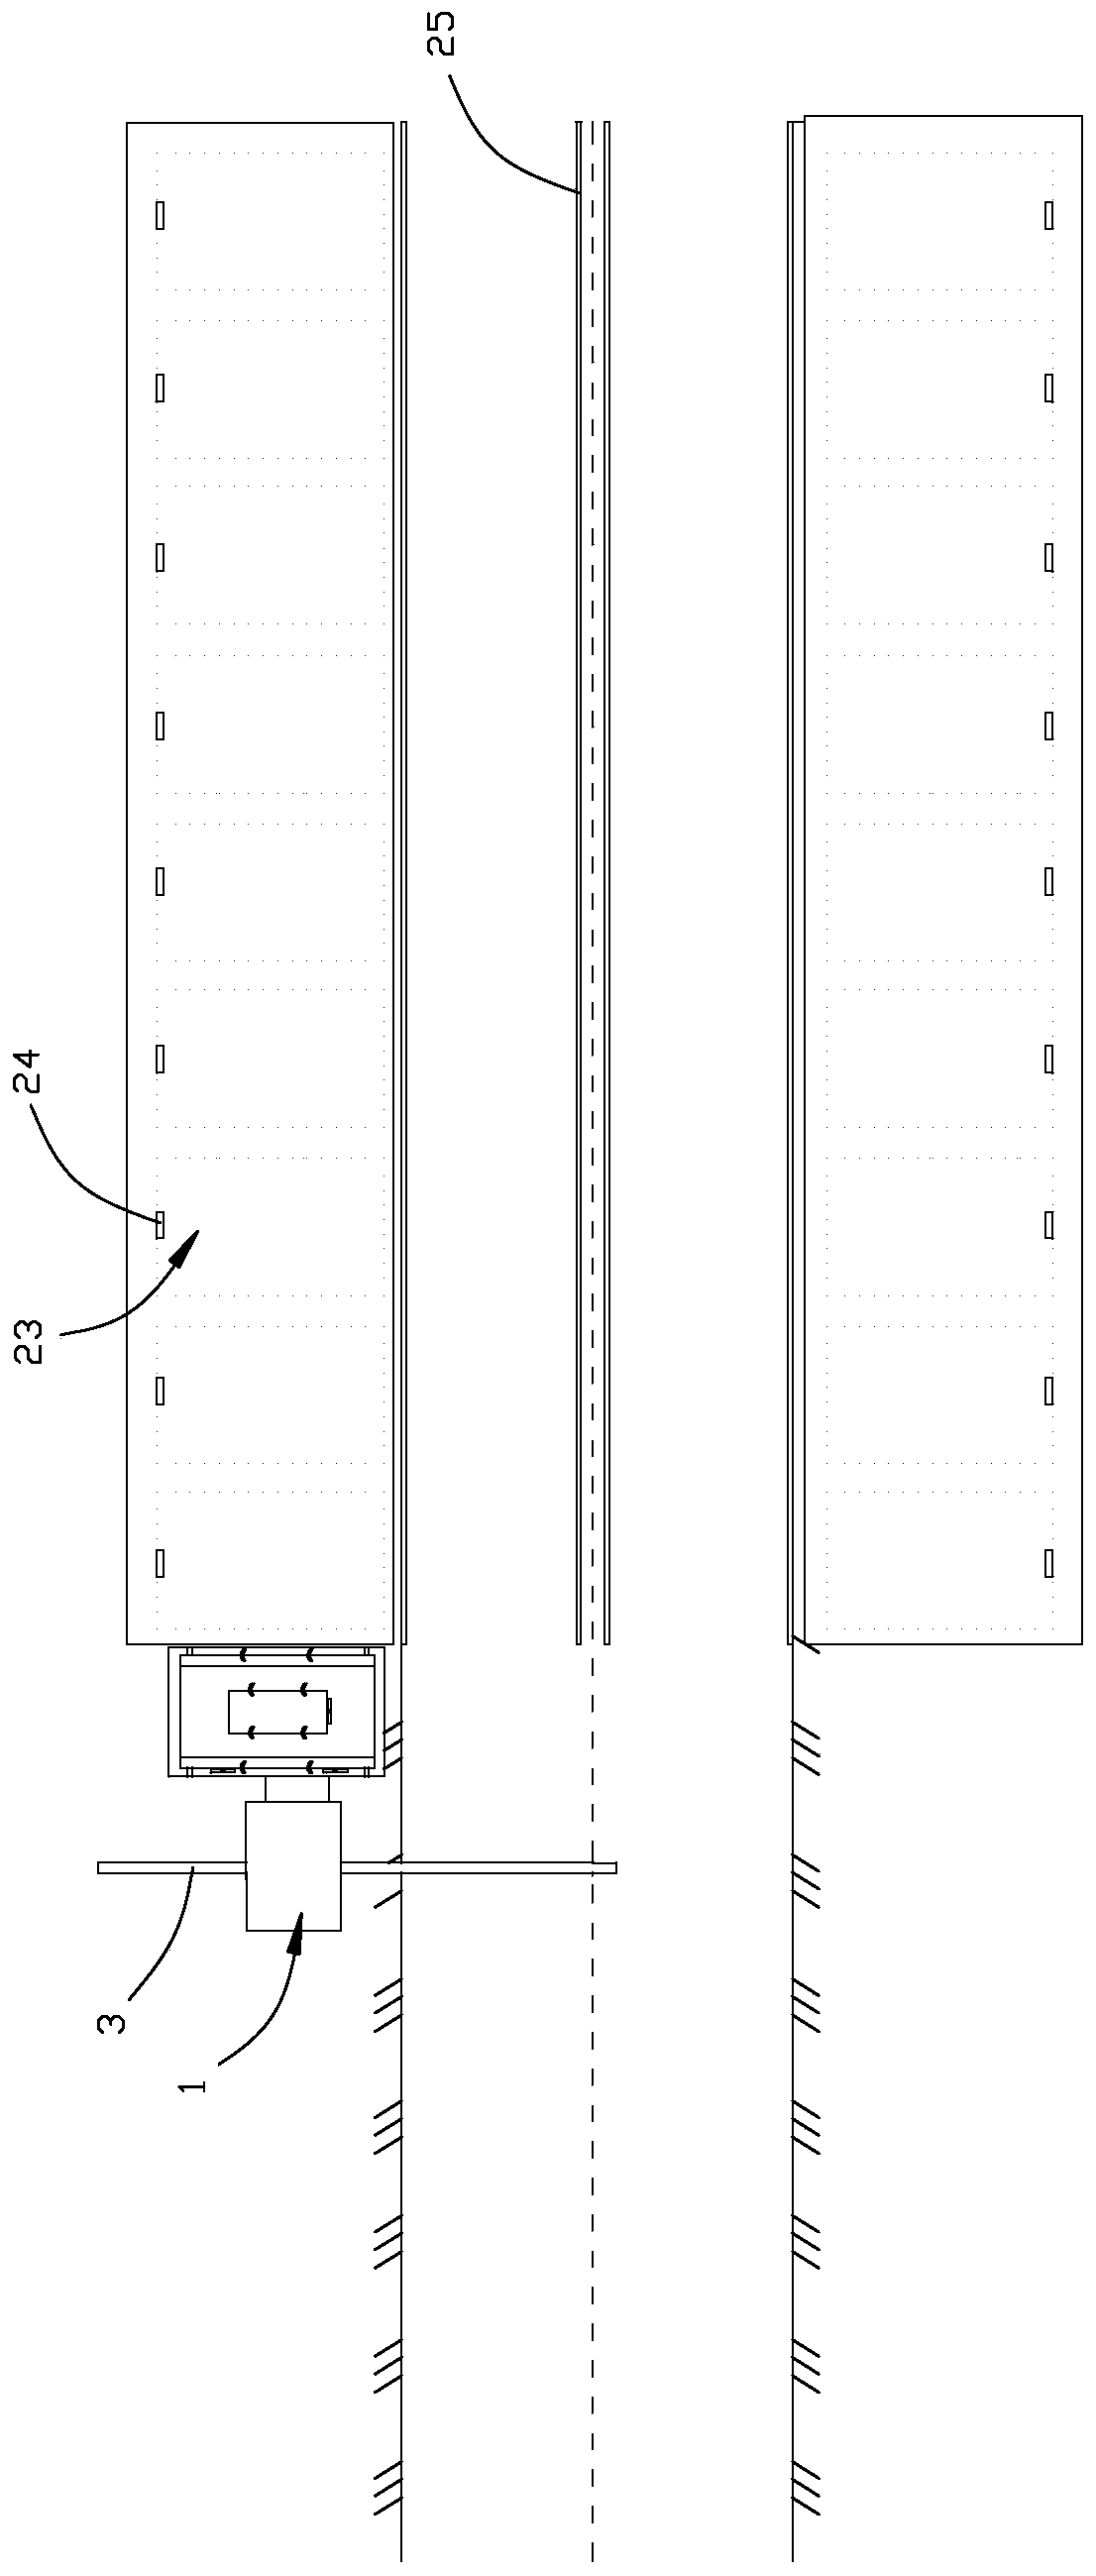 A parking storage method for a three-dimensional parking garage